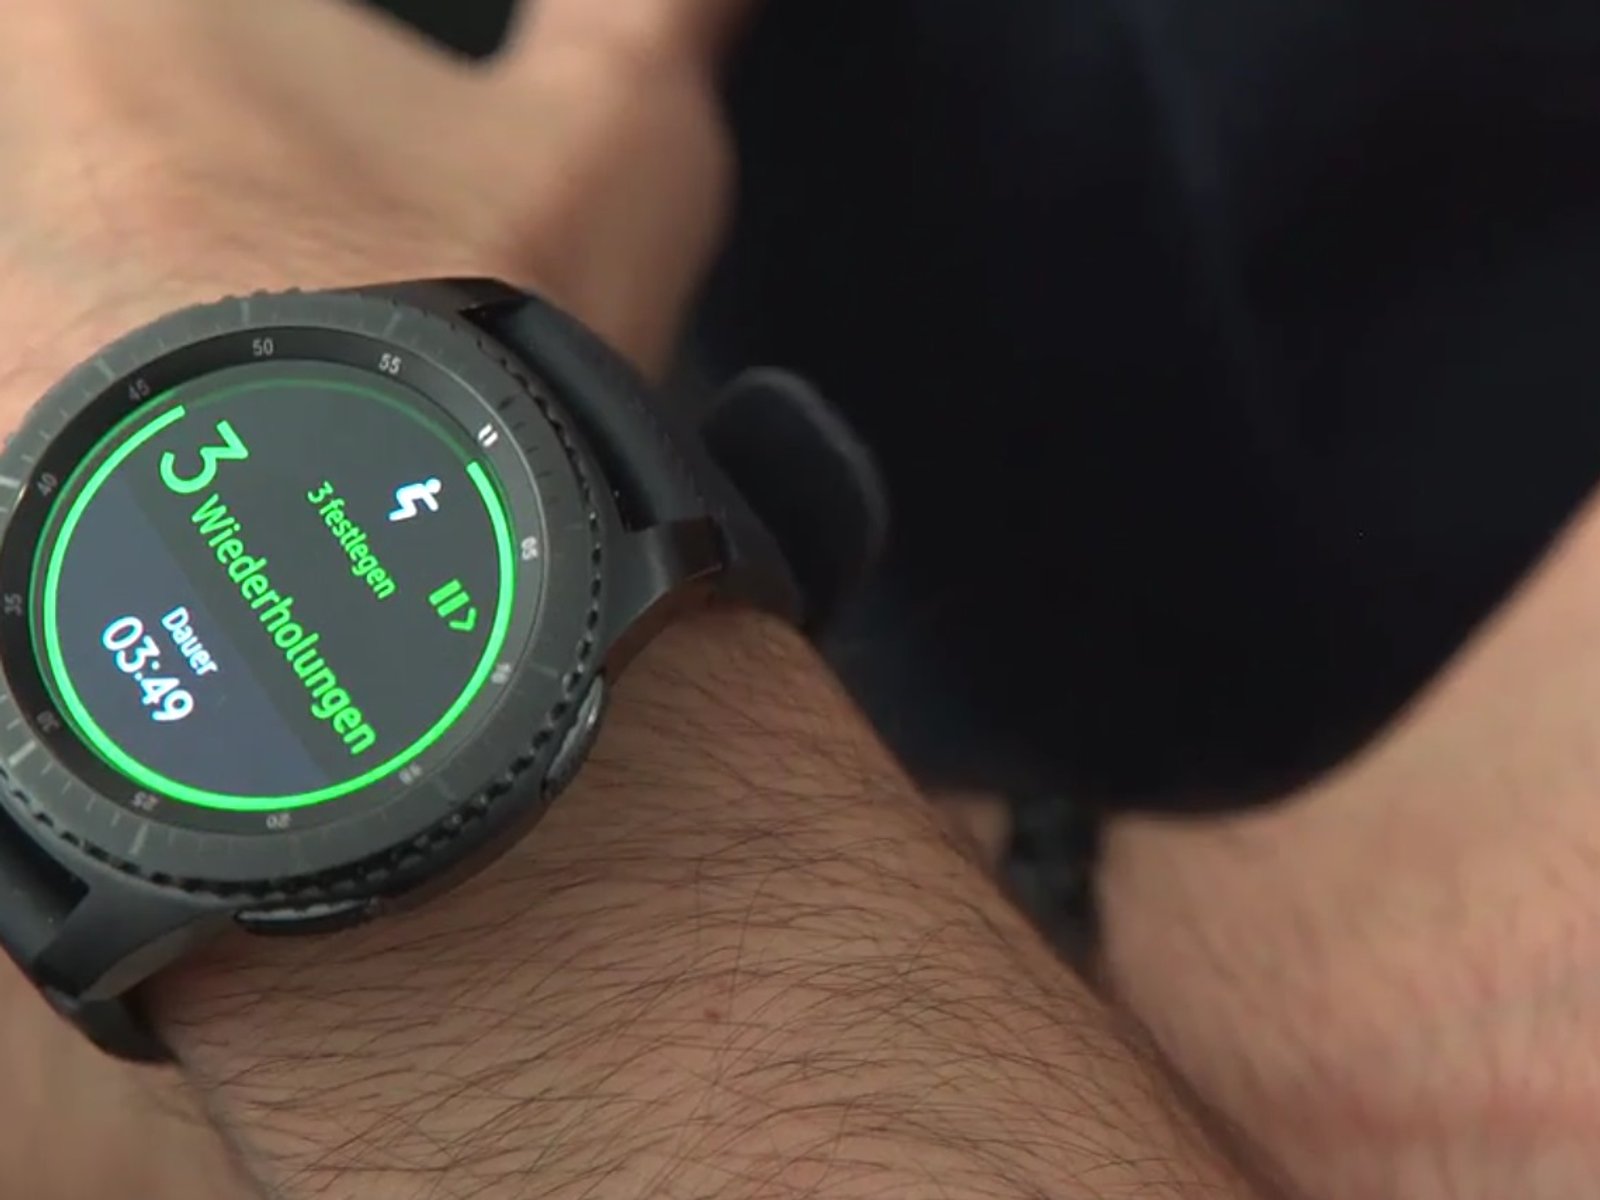 Samsung Watch Промокод